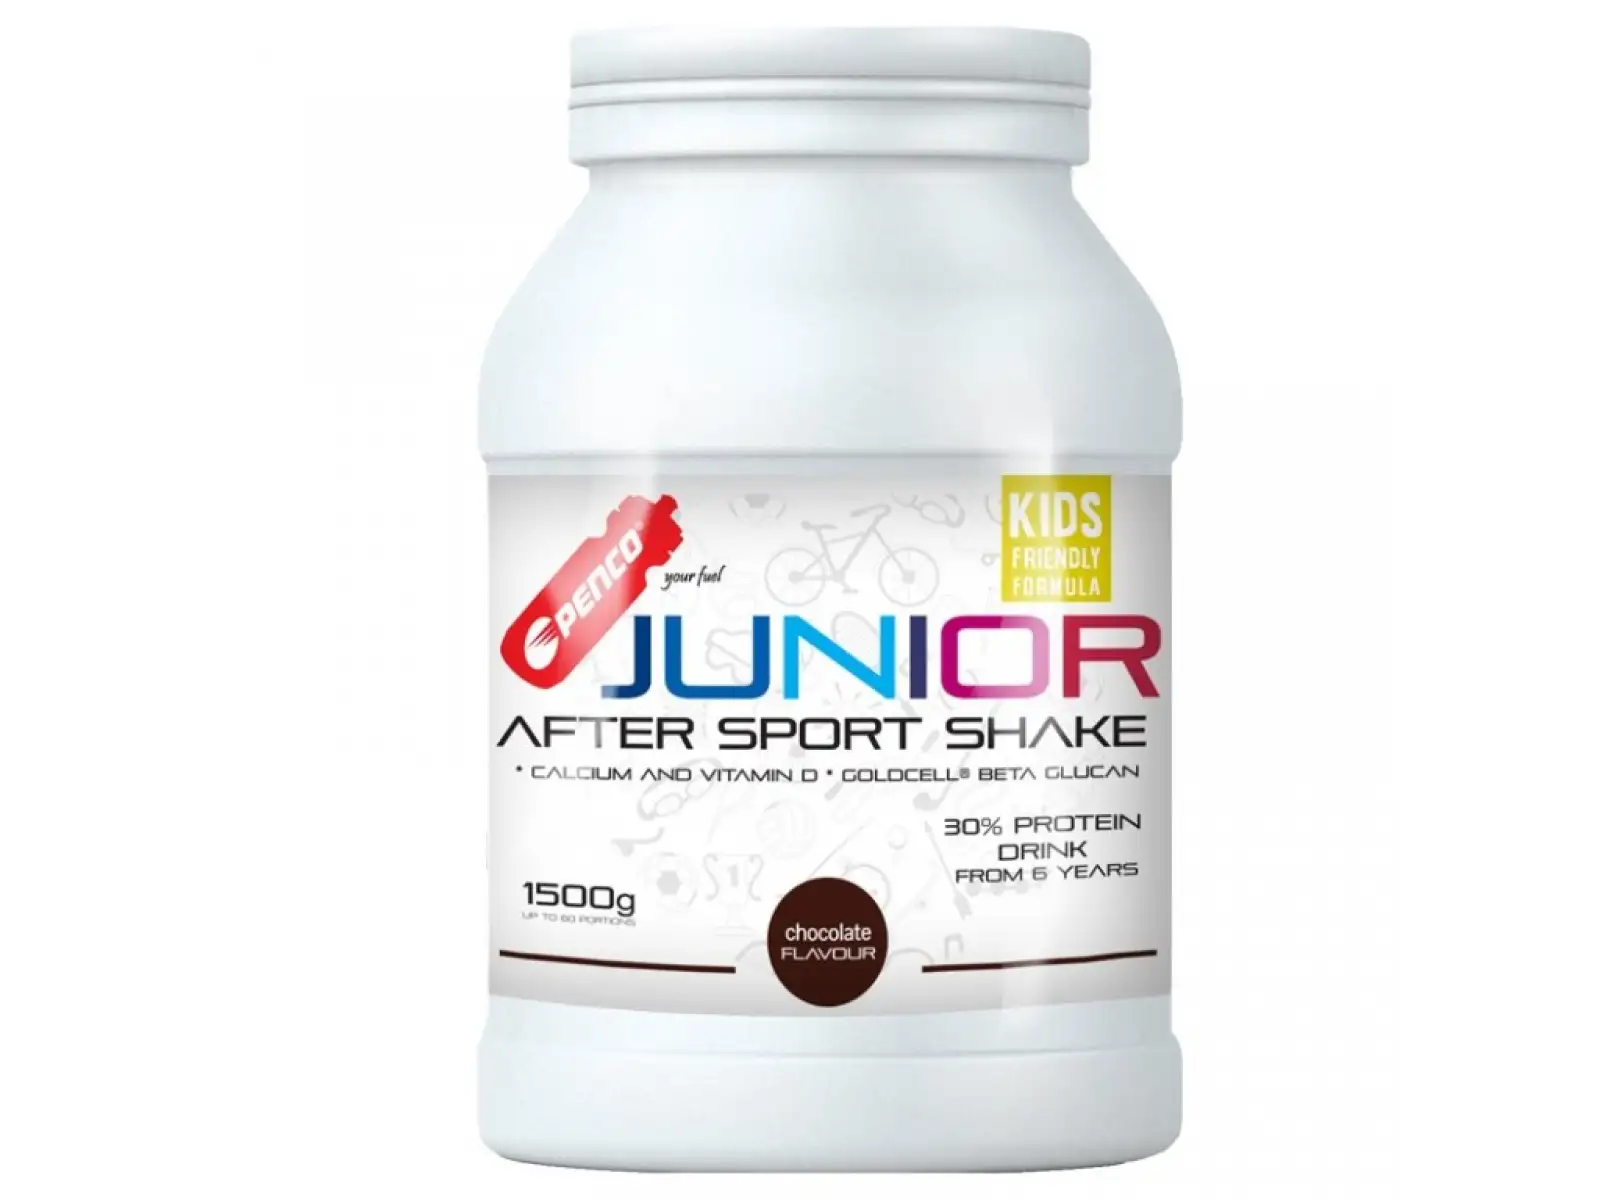 Penco Junior After Sport Shake regenerační nápoj pro juniory 1500g